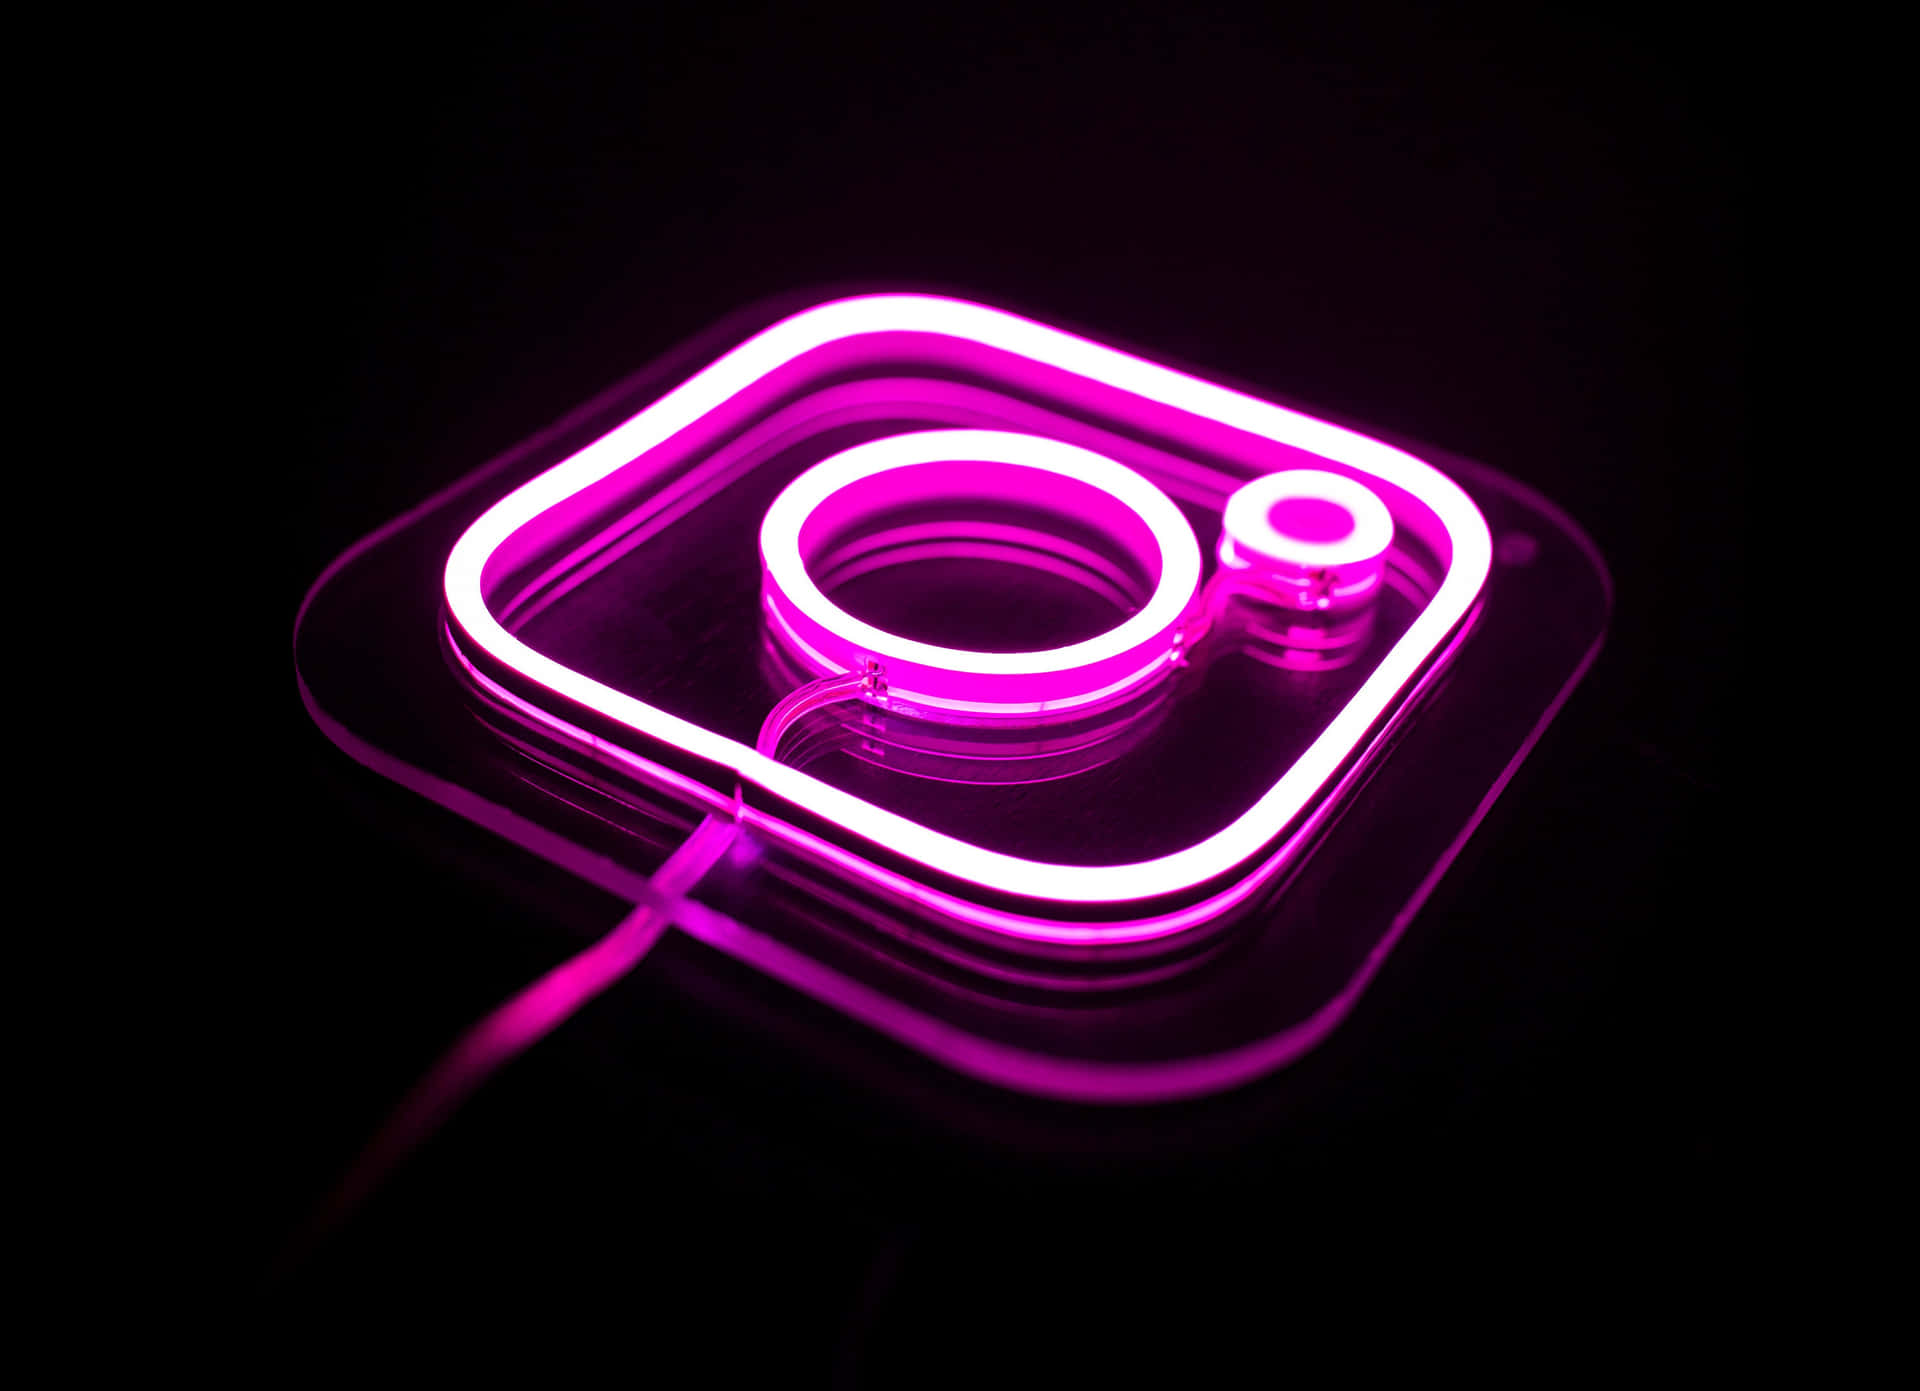 Imagendel Logo De Instagram En Neón